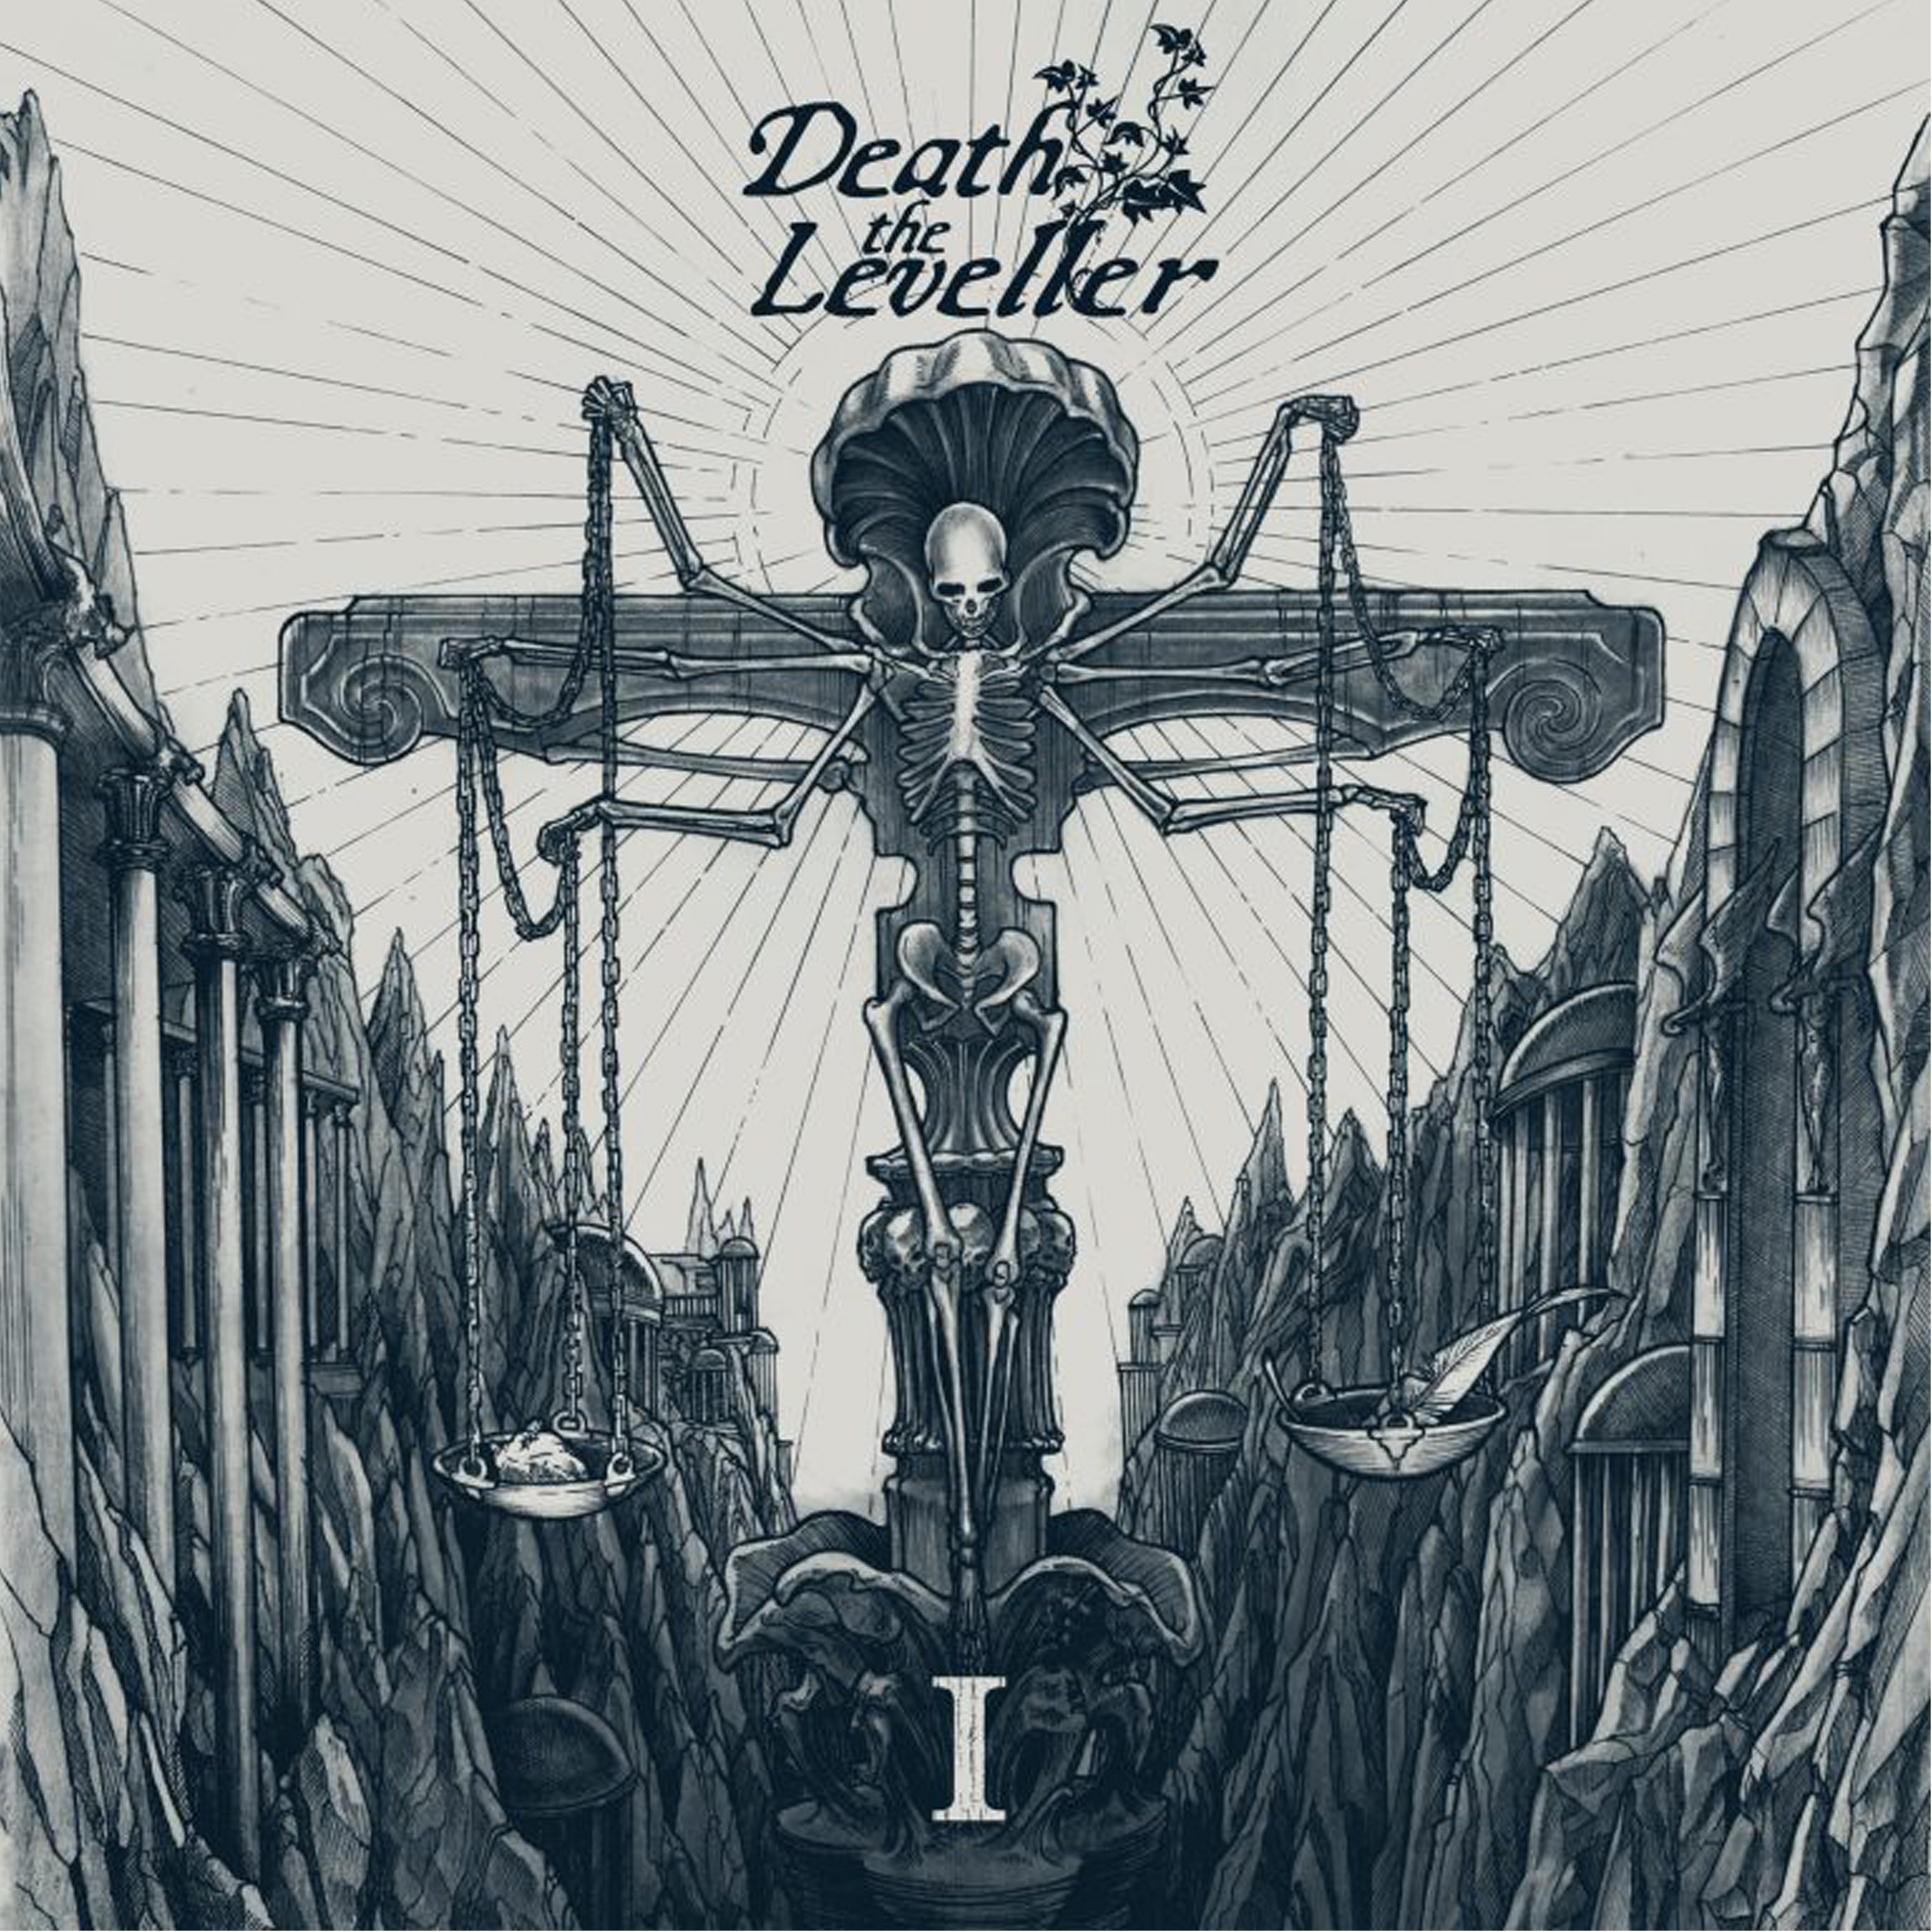 Death обложки. The Death Spell - the Death Spell (альбом). Алисай левеллер. Тег Death.